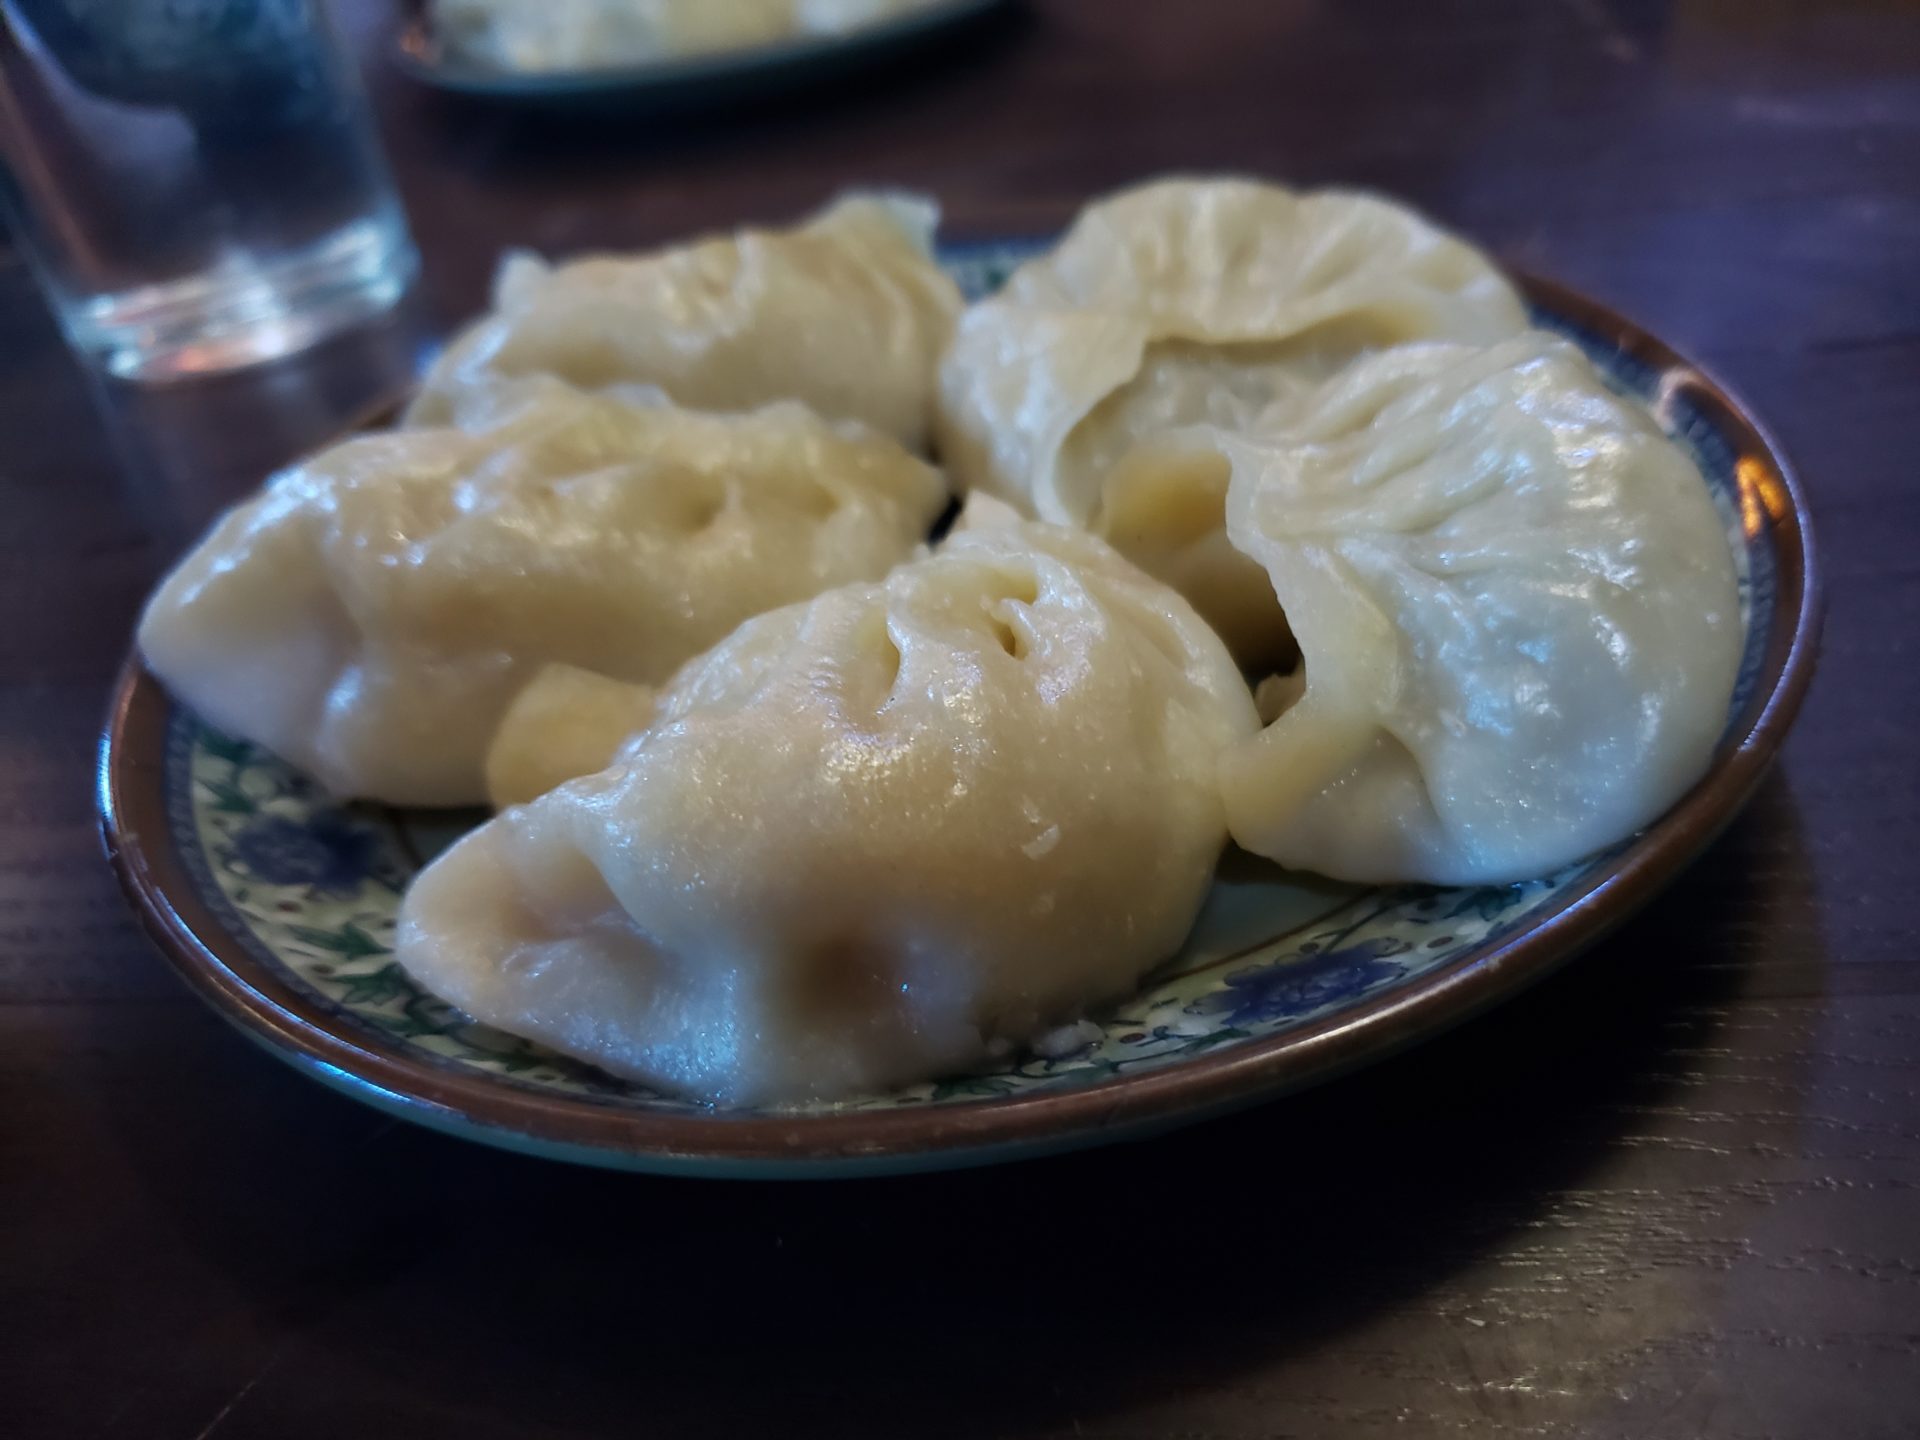 a plate of dumplings on a table